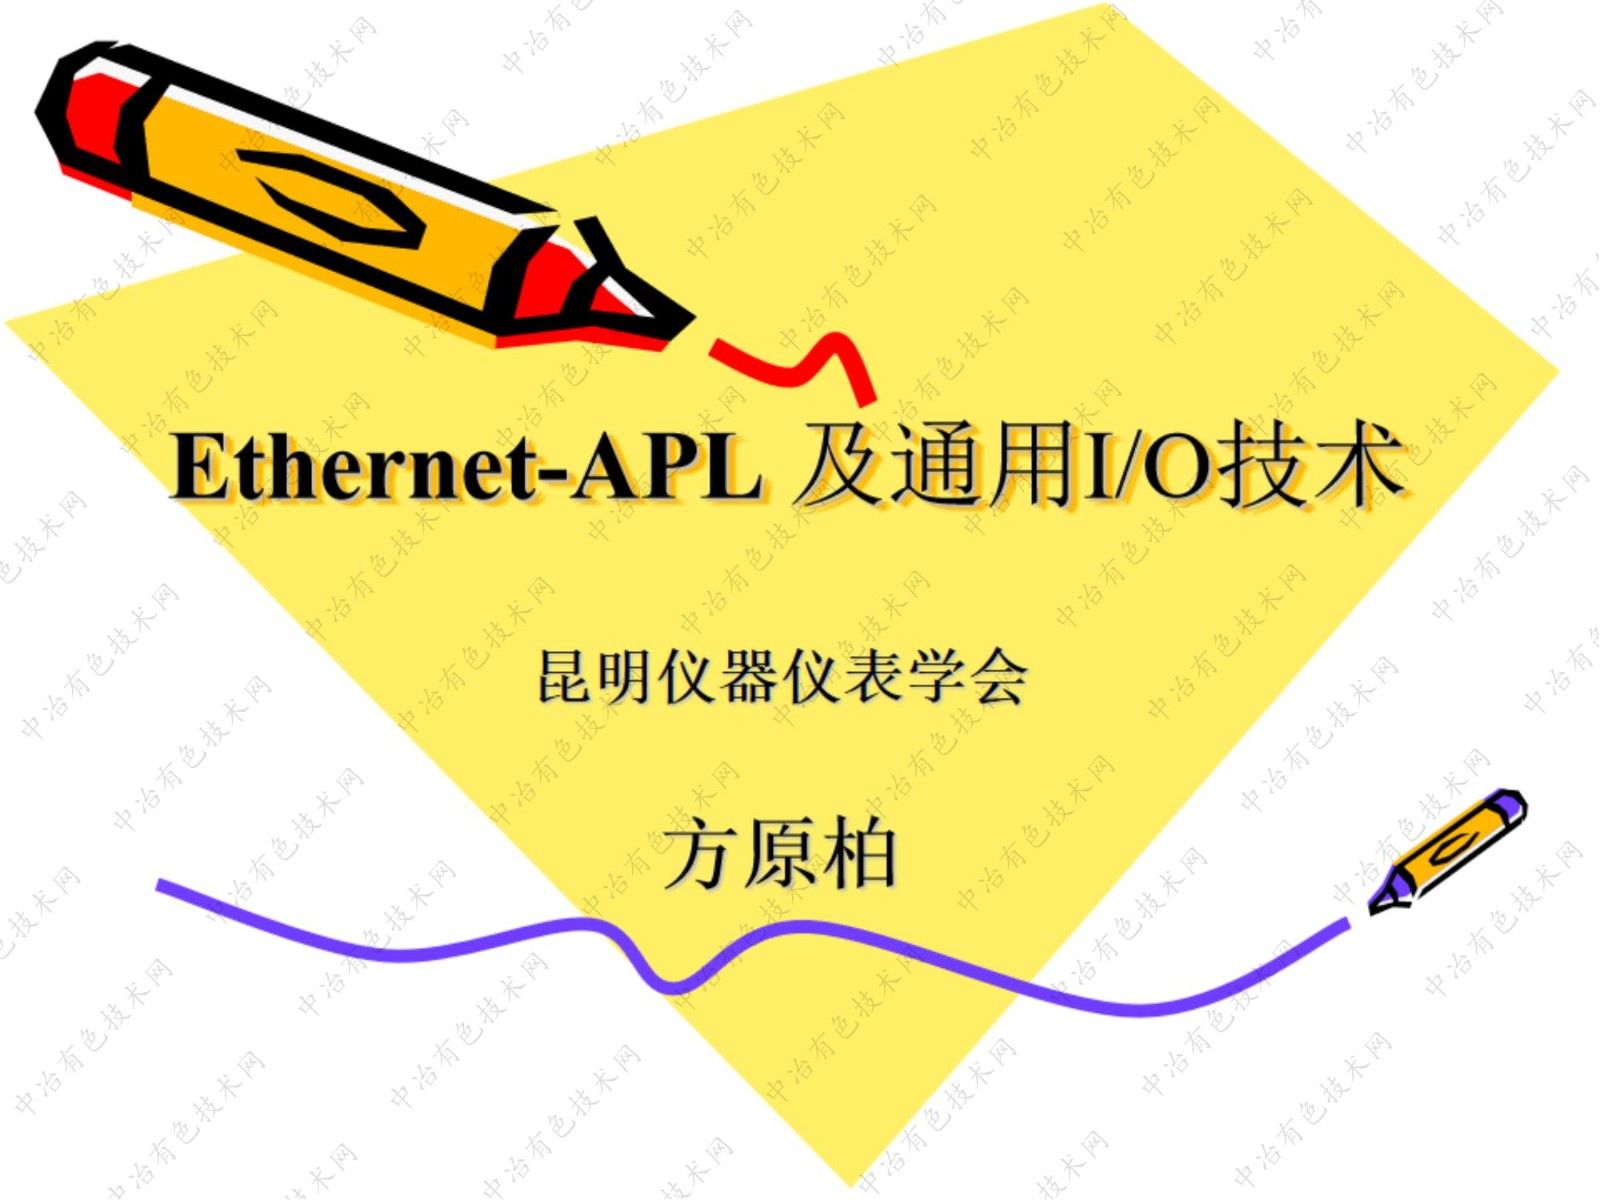 Ethernet-APL 及通用I/O技术